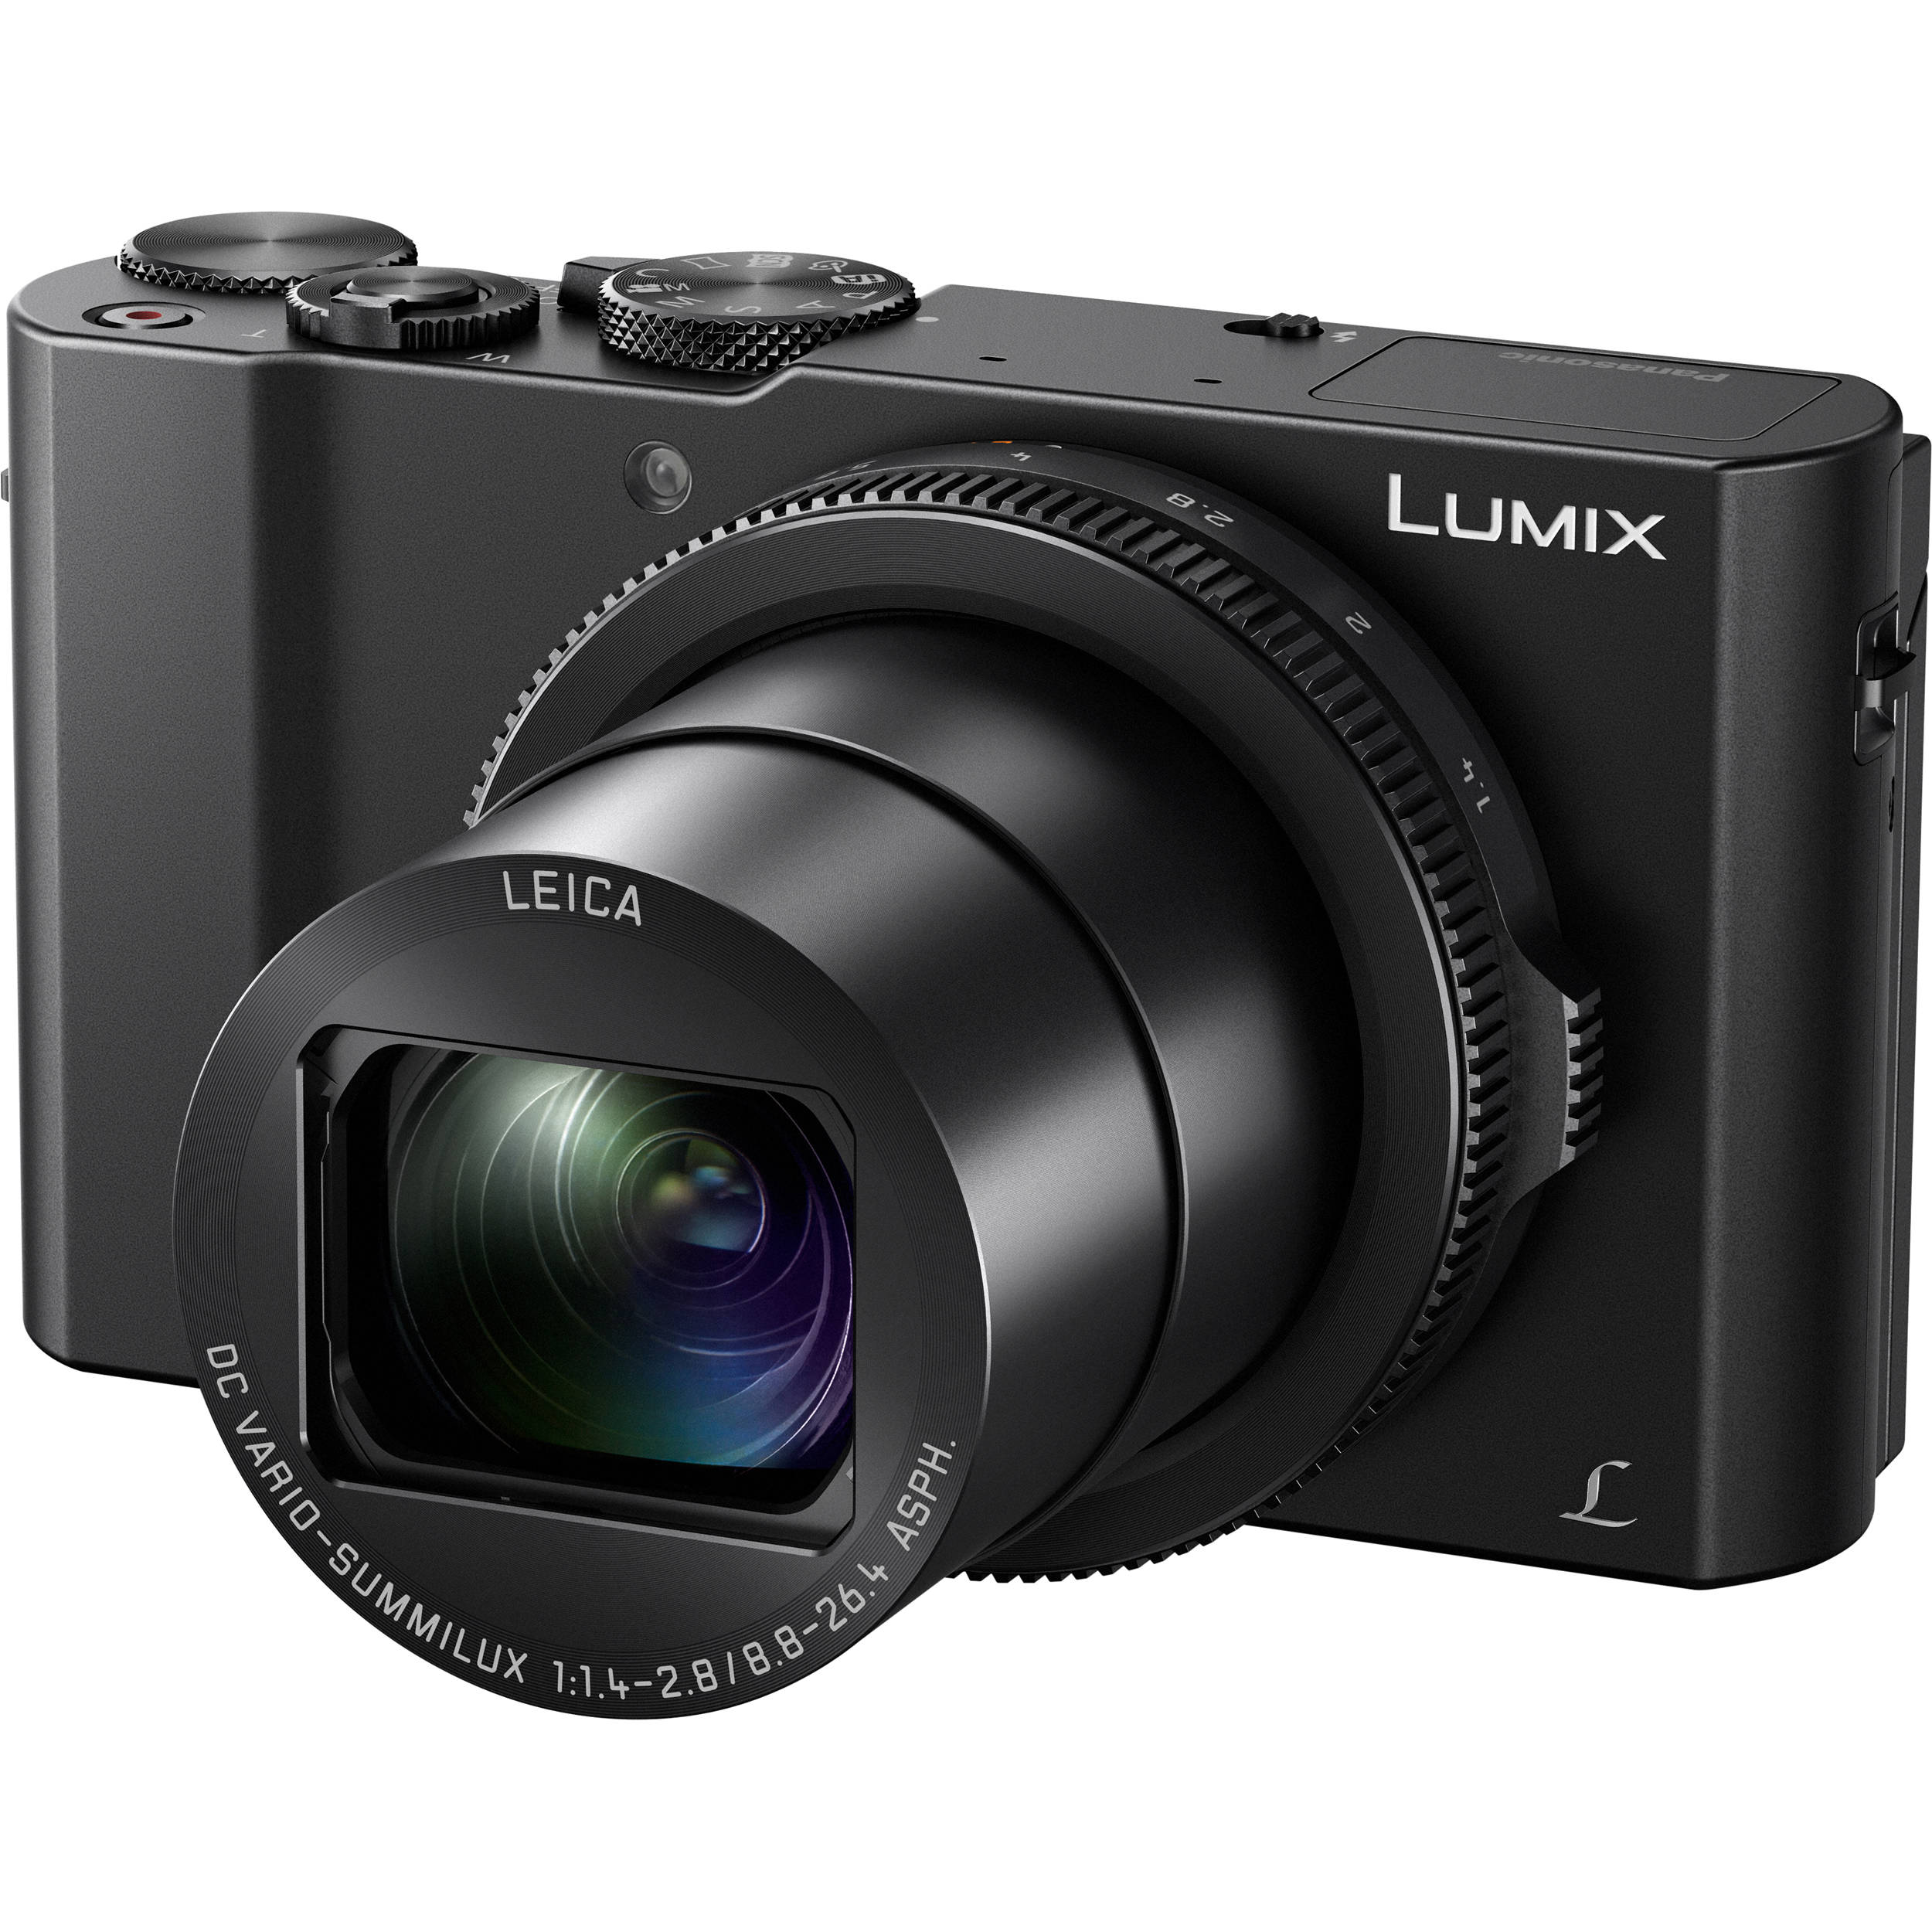 Panasonic Camera Lumix Top Sellers, 52% OFF | blountpartnership.com